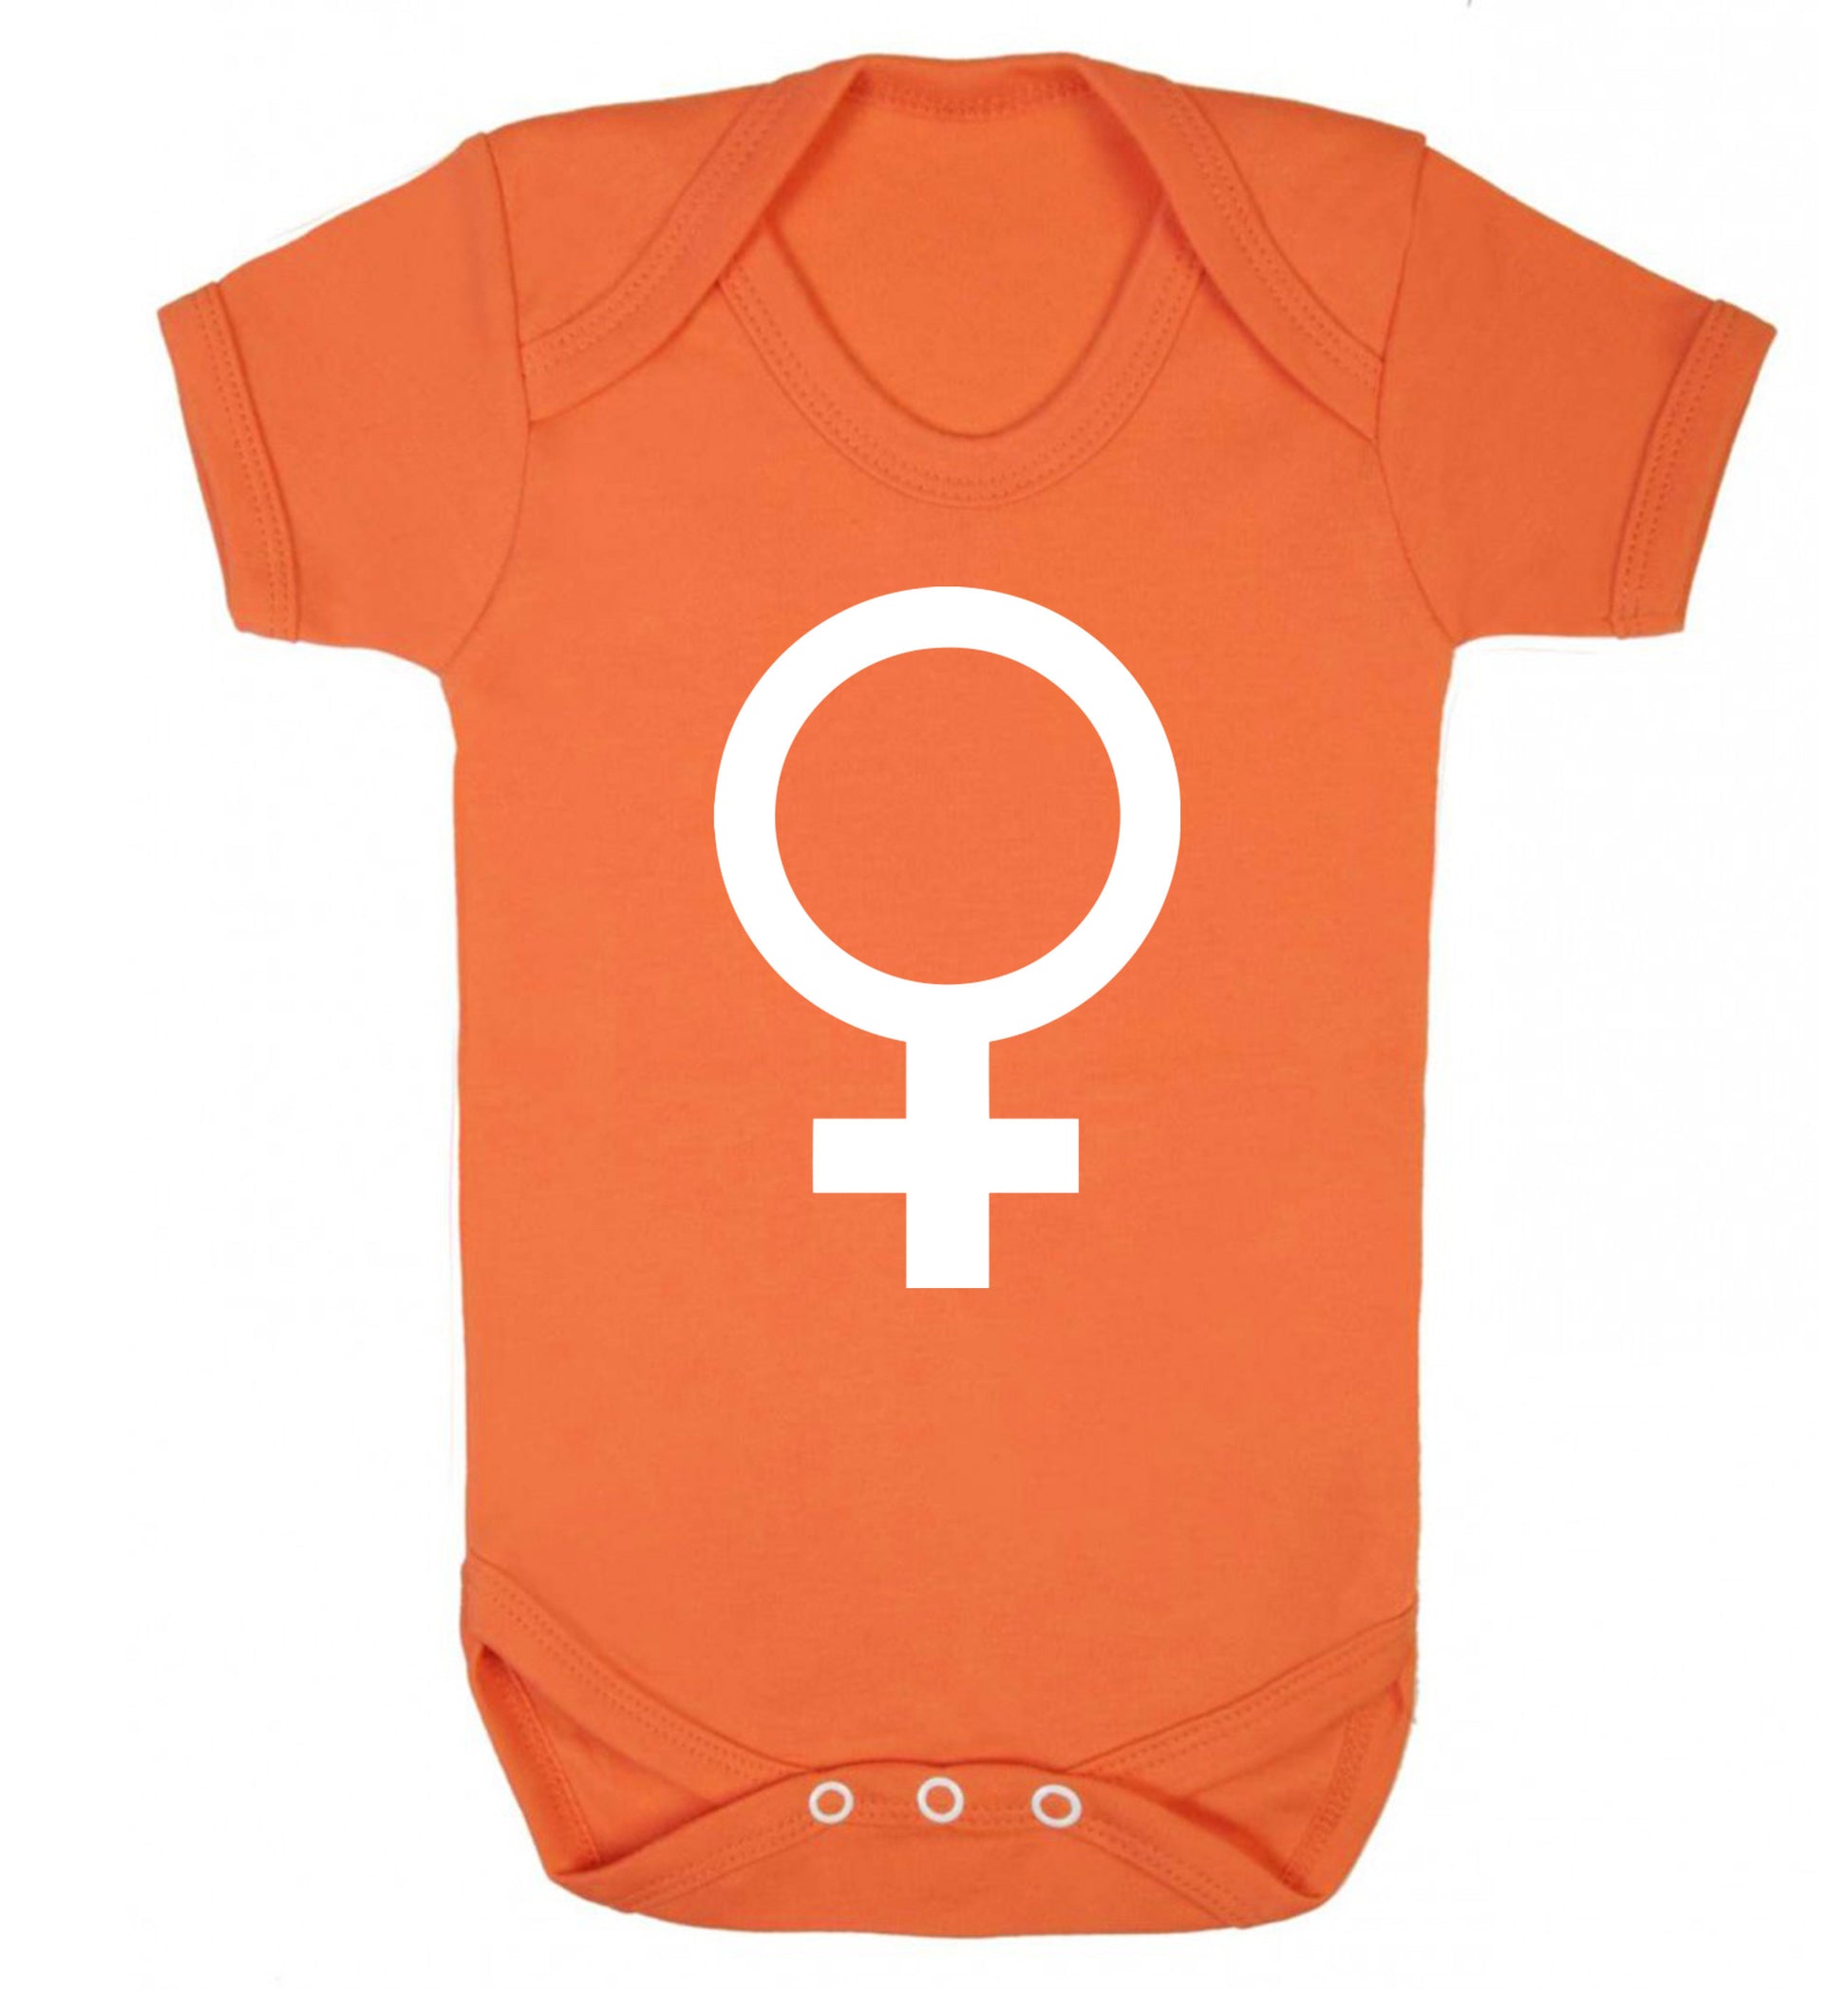 Female symbol large Baby Vest orange 18-24 months